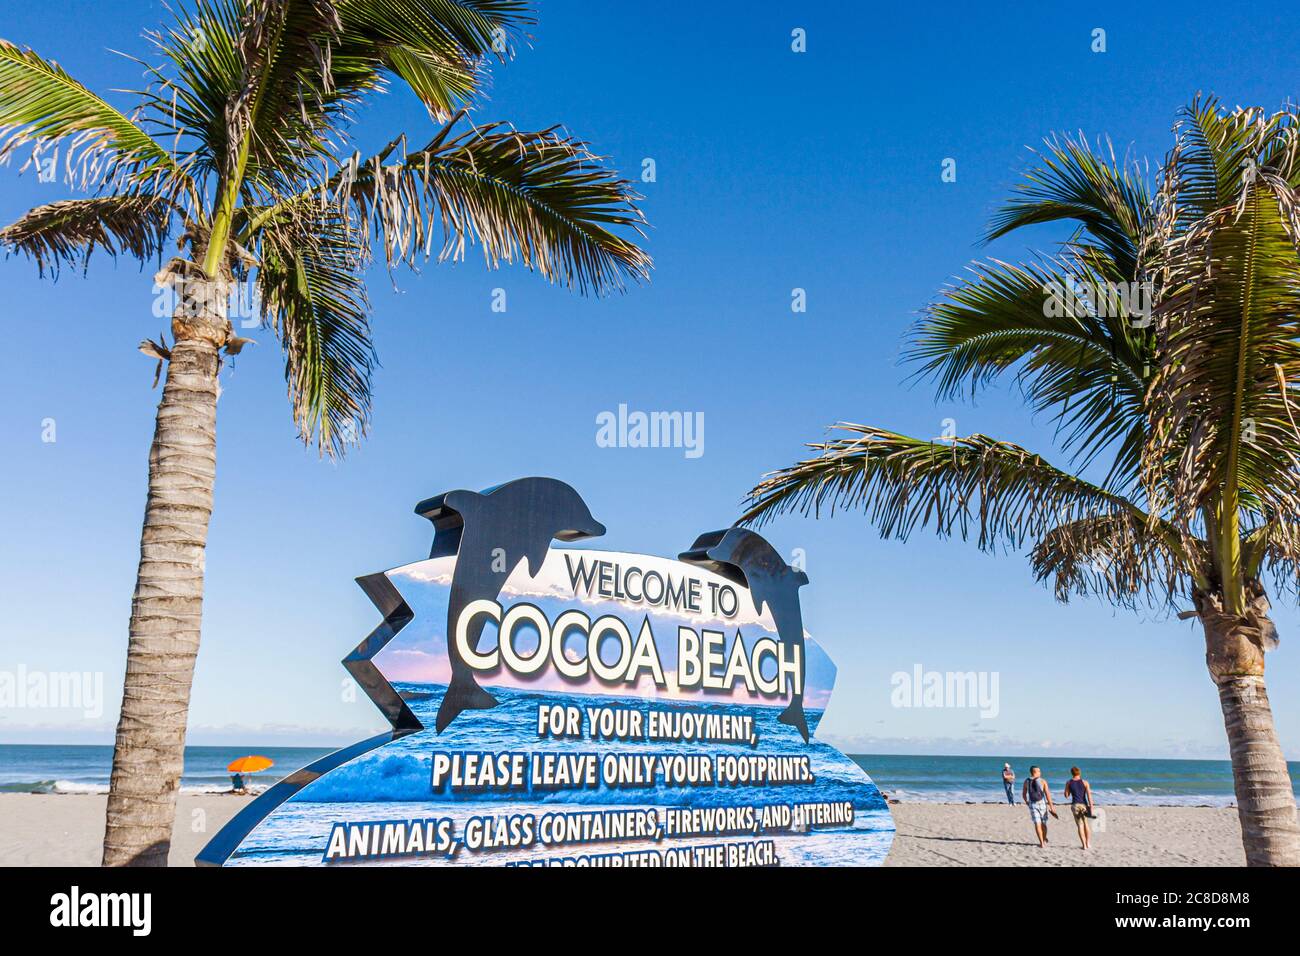 Cocoa Beach Florida, Atlantic Ocean Water Public, Strandstrände, Schild, Logo, Begrüßung, Palmen, Frond, Menschen, Strandgänger, Fußabdrücke, verbieten, Tiere, gla Stockfoto